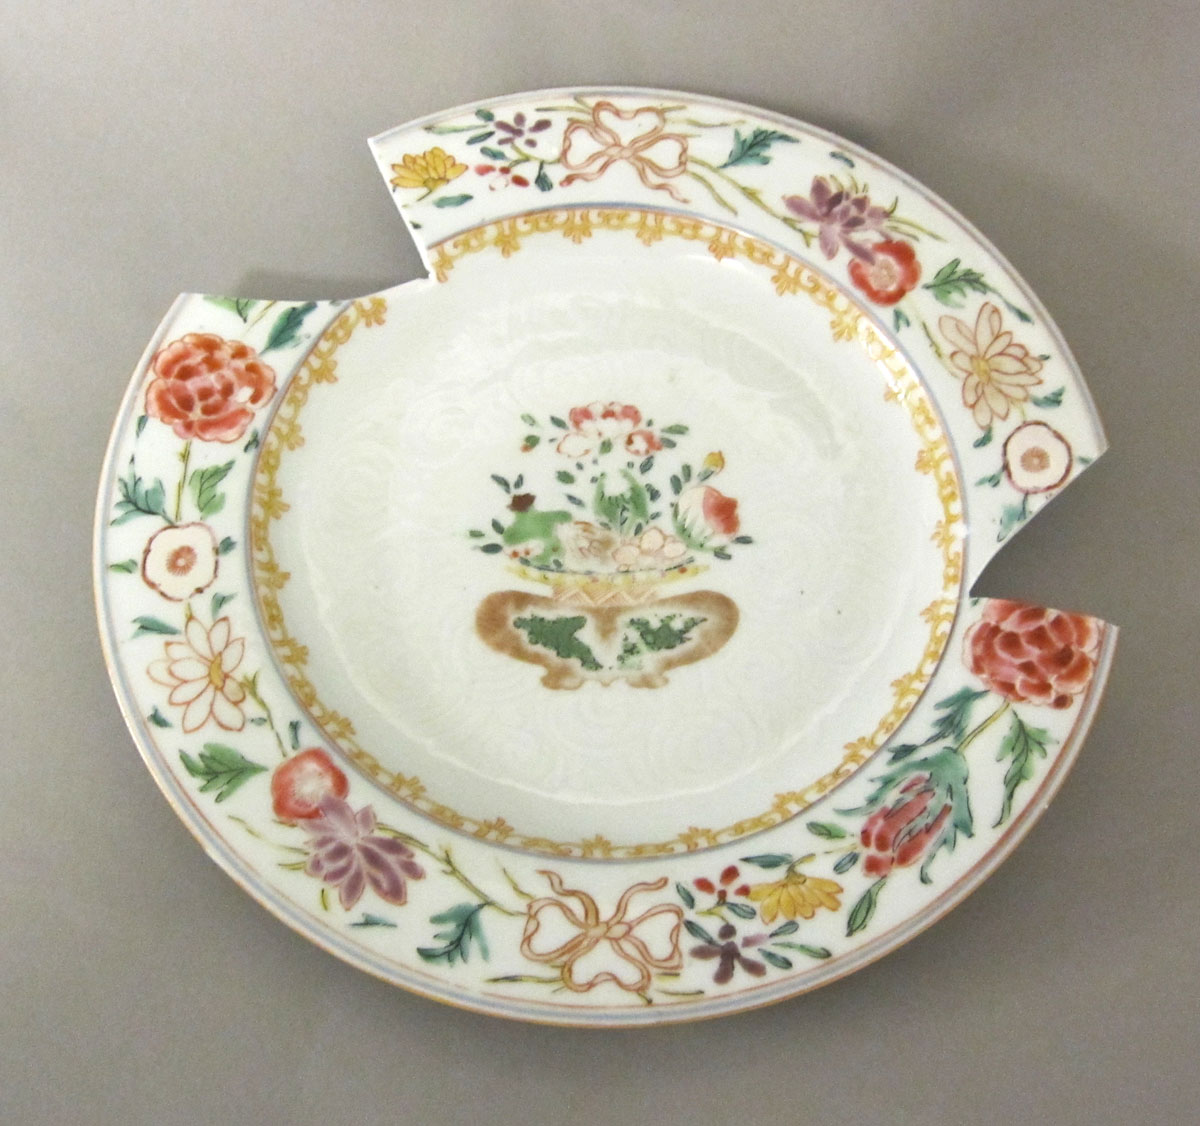 1962.0508 Porcelain plate